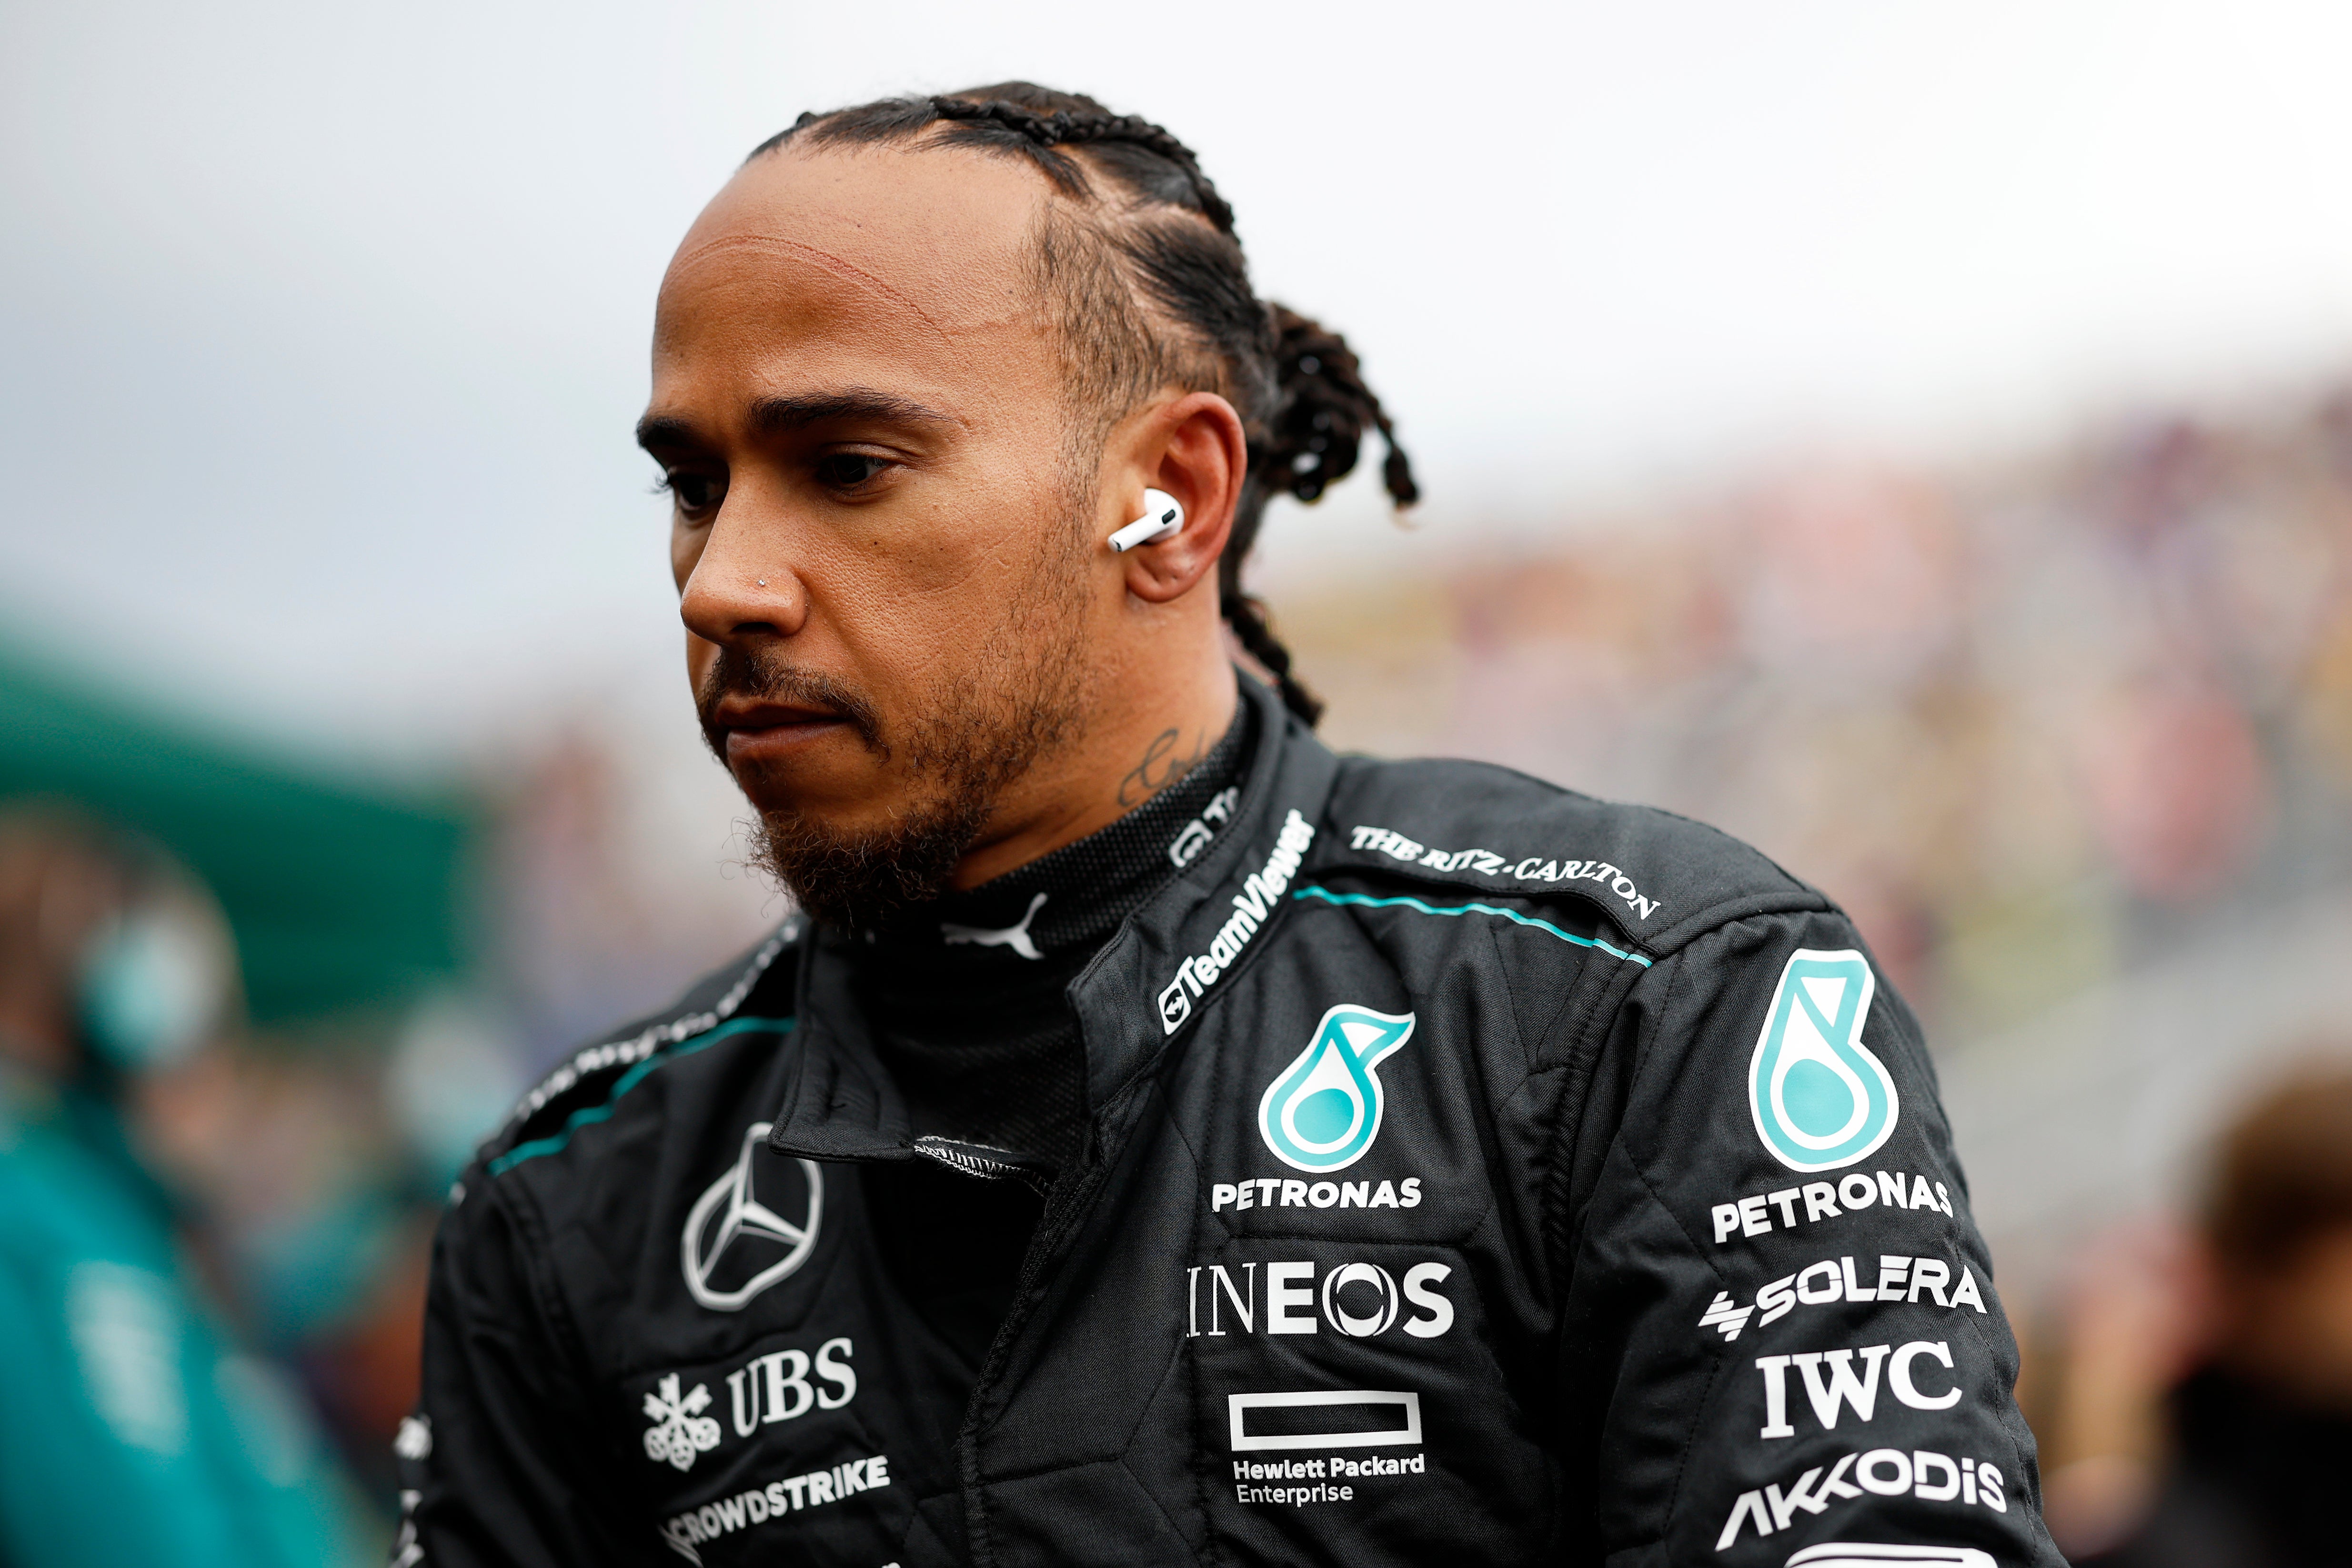 Lewis Hamilton finished fourth in Sunday’s race